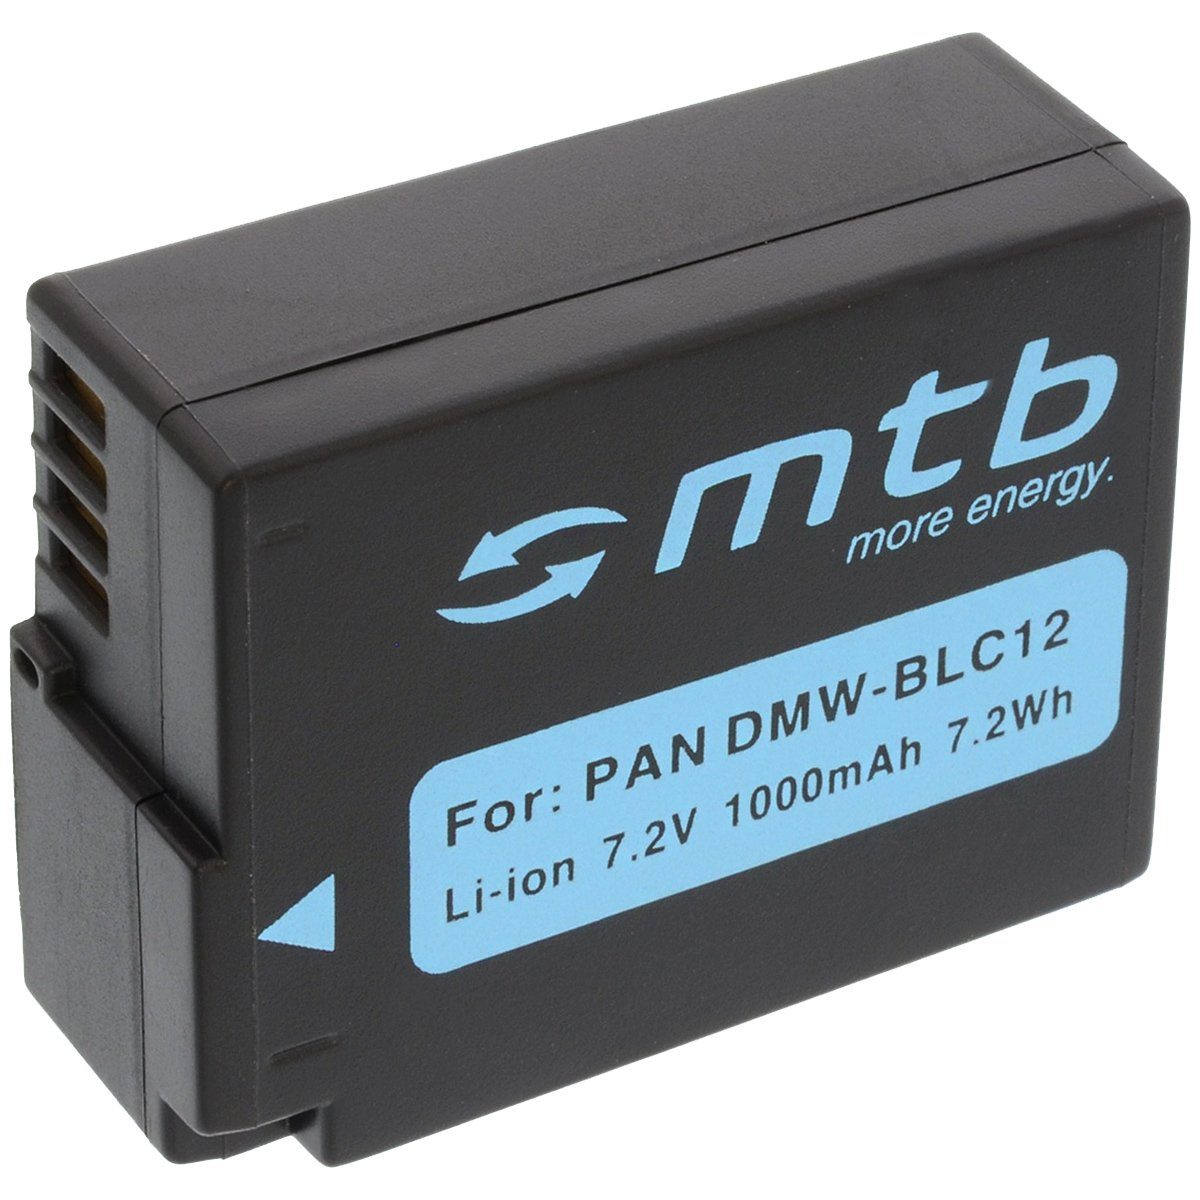 mtb more energy [BAT-262 - Li-Ion] Kamera-Akku kompatibel mit Akku-Typ Panasonic DMW-BLC12 1000 mAh (7,2 V), passend für: Panasonic Lumix DMC-FZ200, FZ300, FZ1000, FZ1000 II, FZ2000…